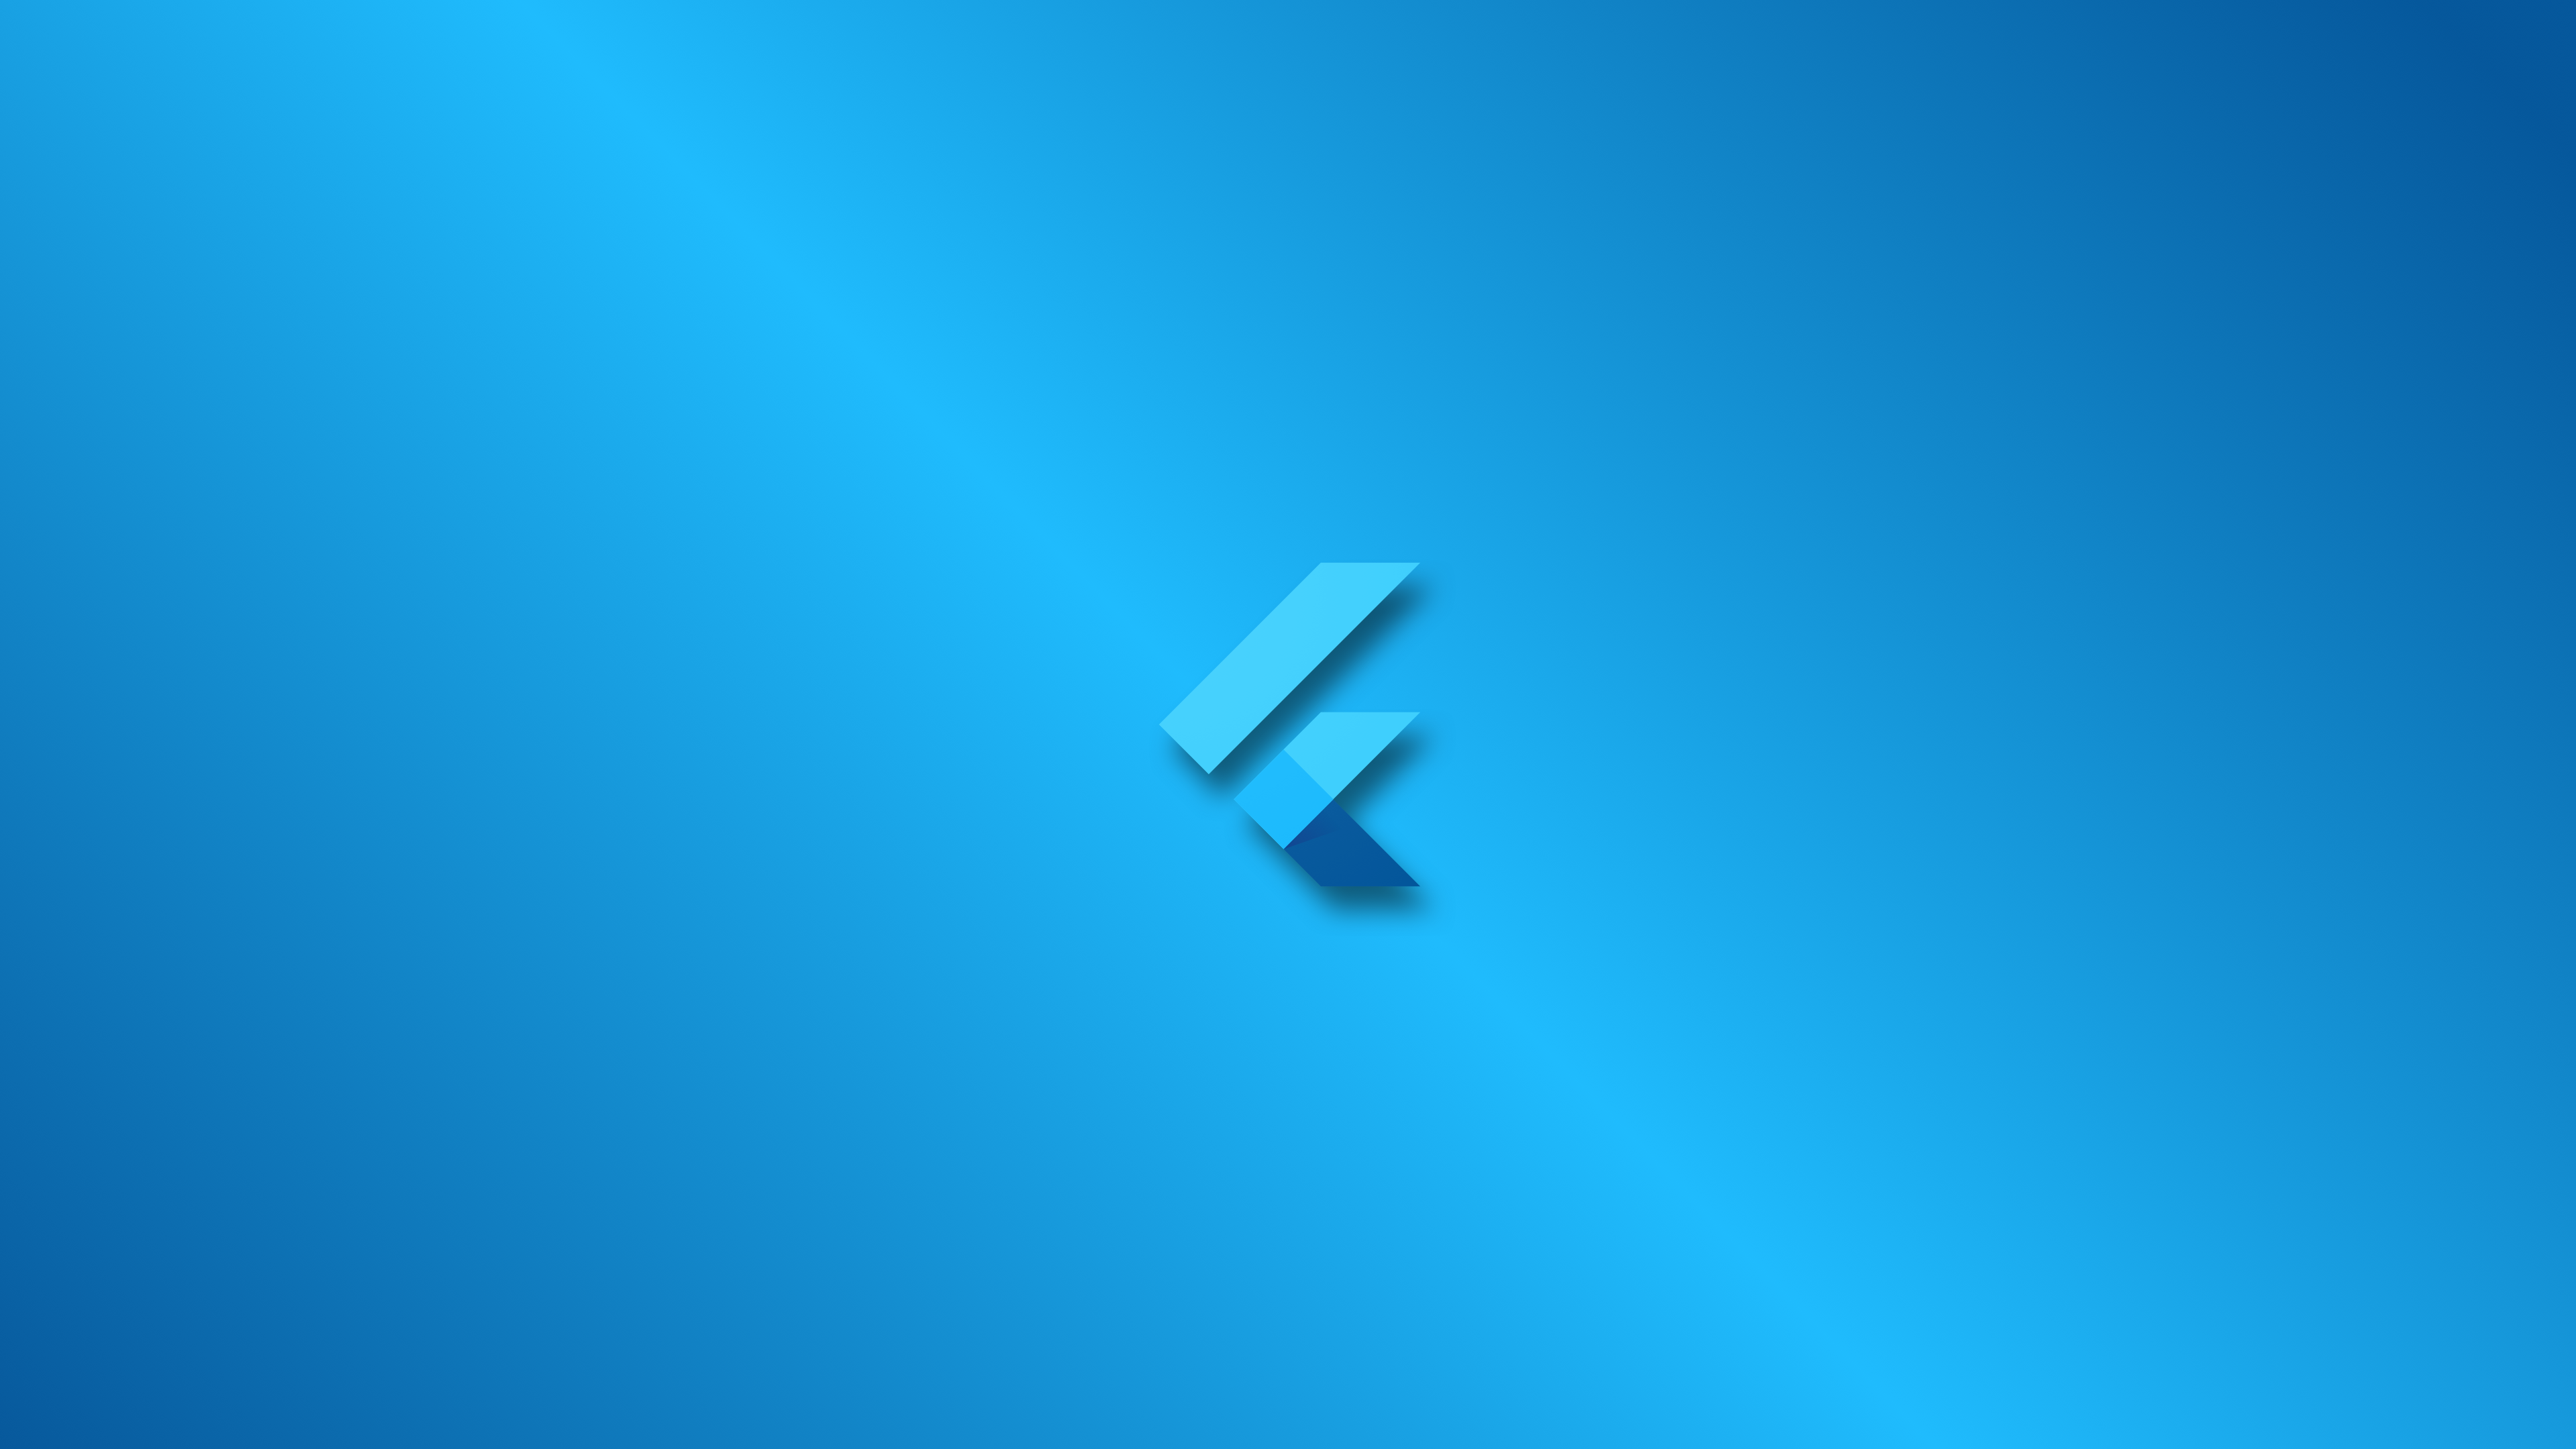 General 3840x2160 development programming language programming web development flutter simple background blue background logo